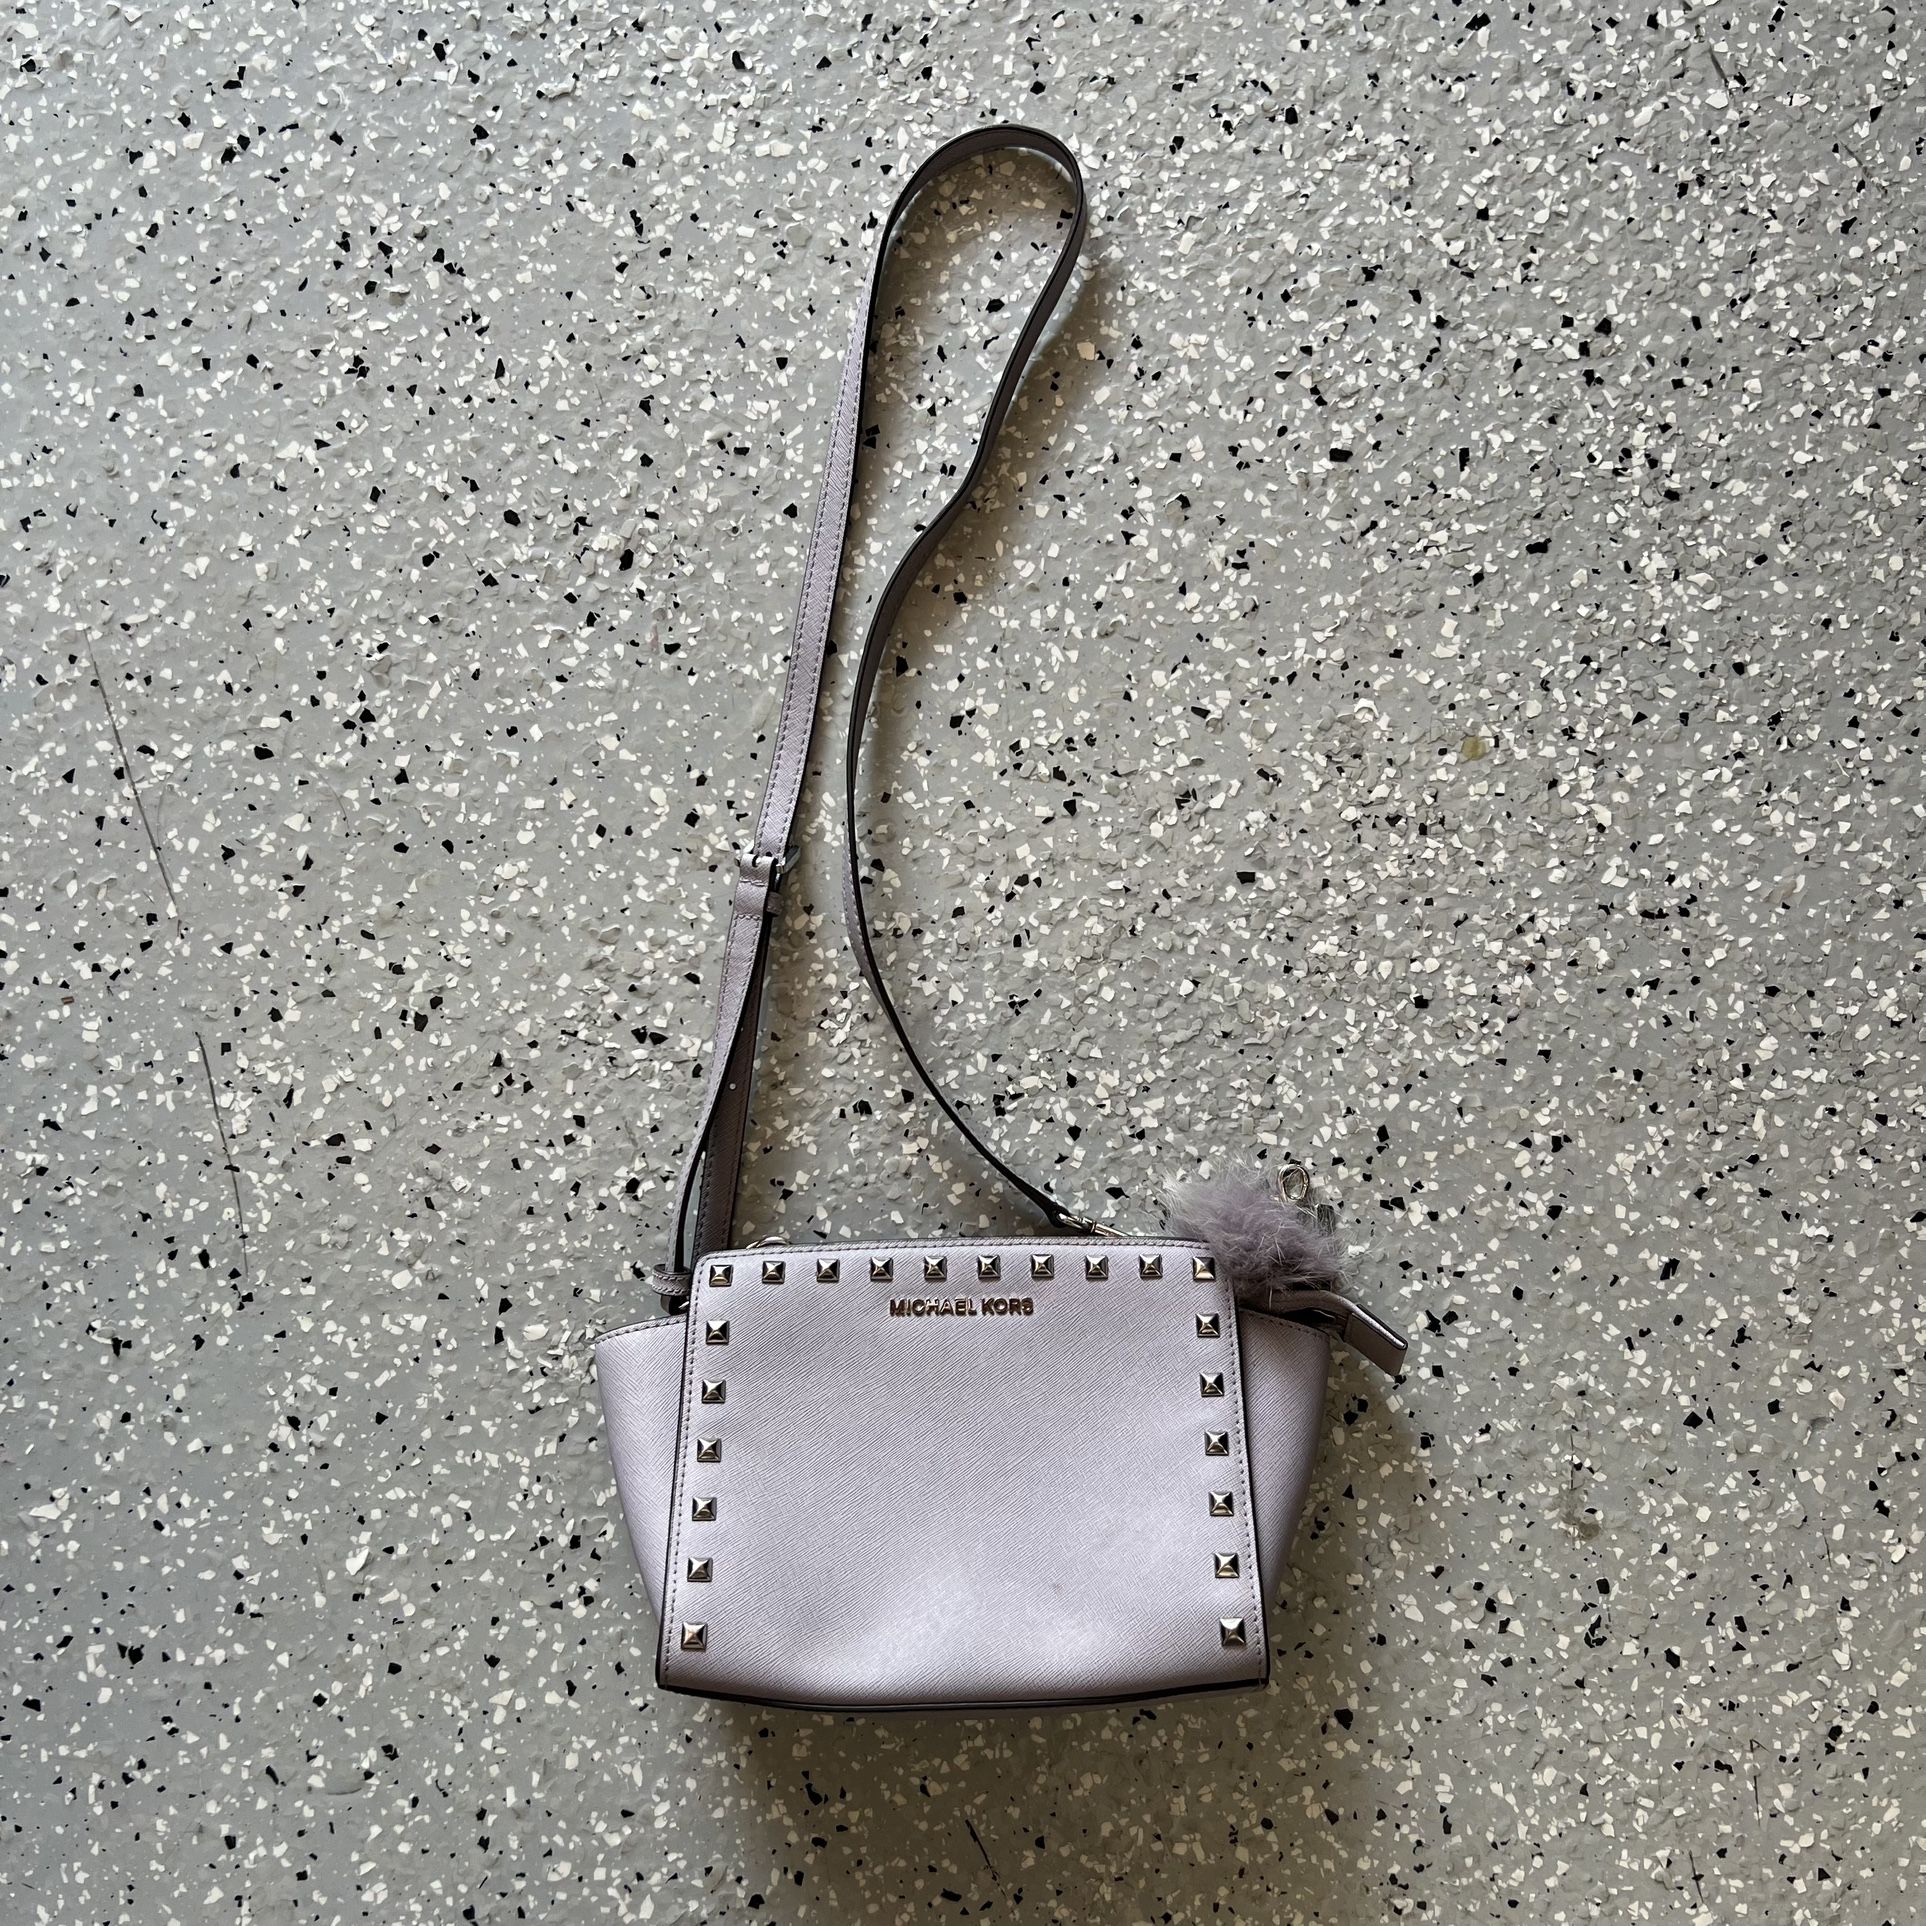 Selma Medium Two-Tone Saffiano Leather Crossbody Bag